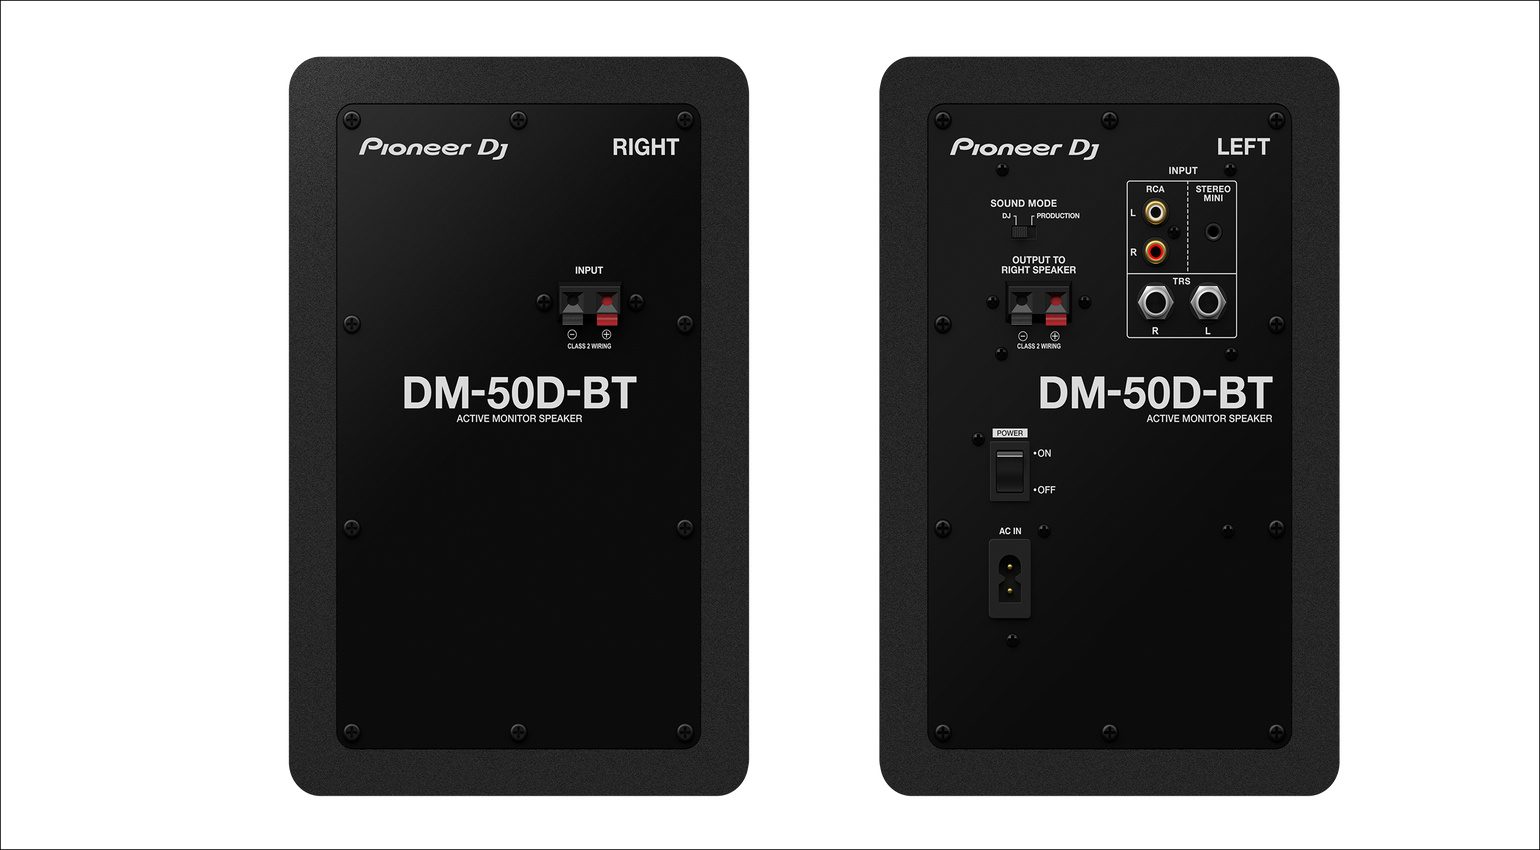 Pioneer DJ DM-40D